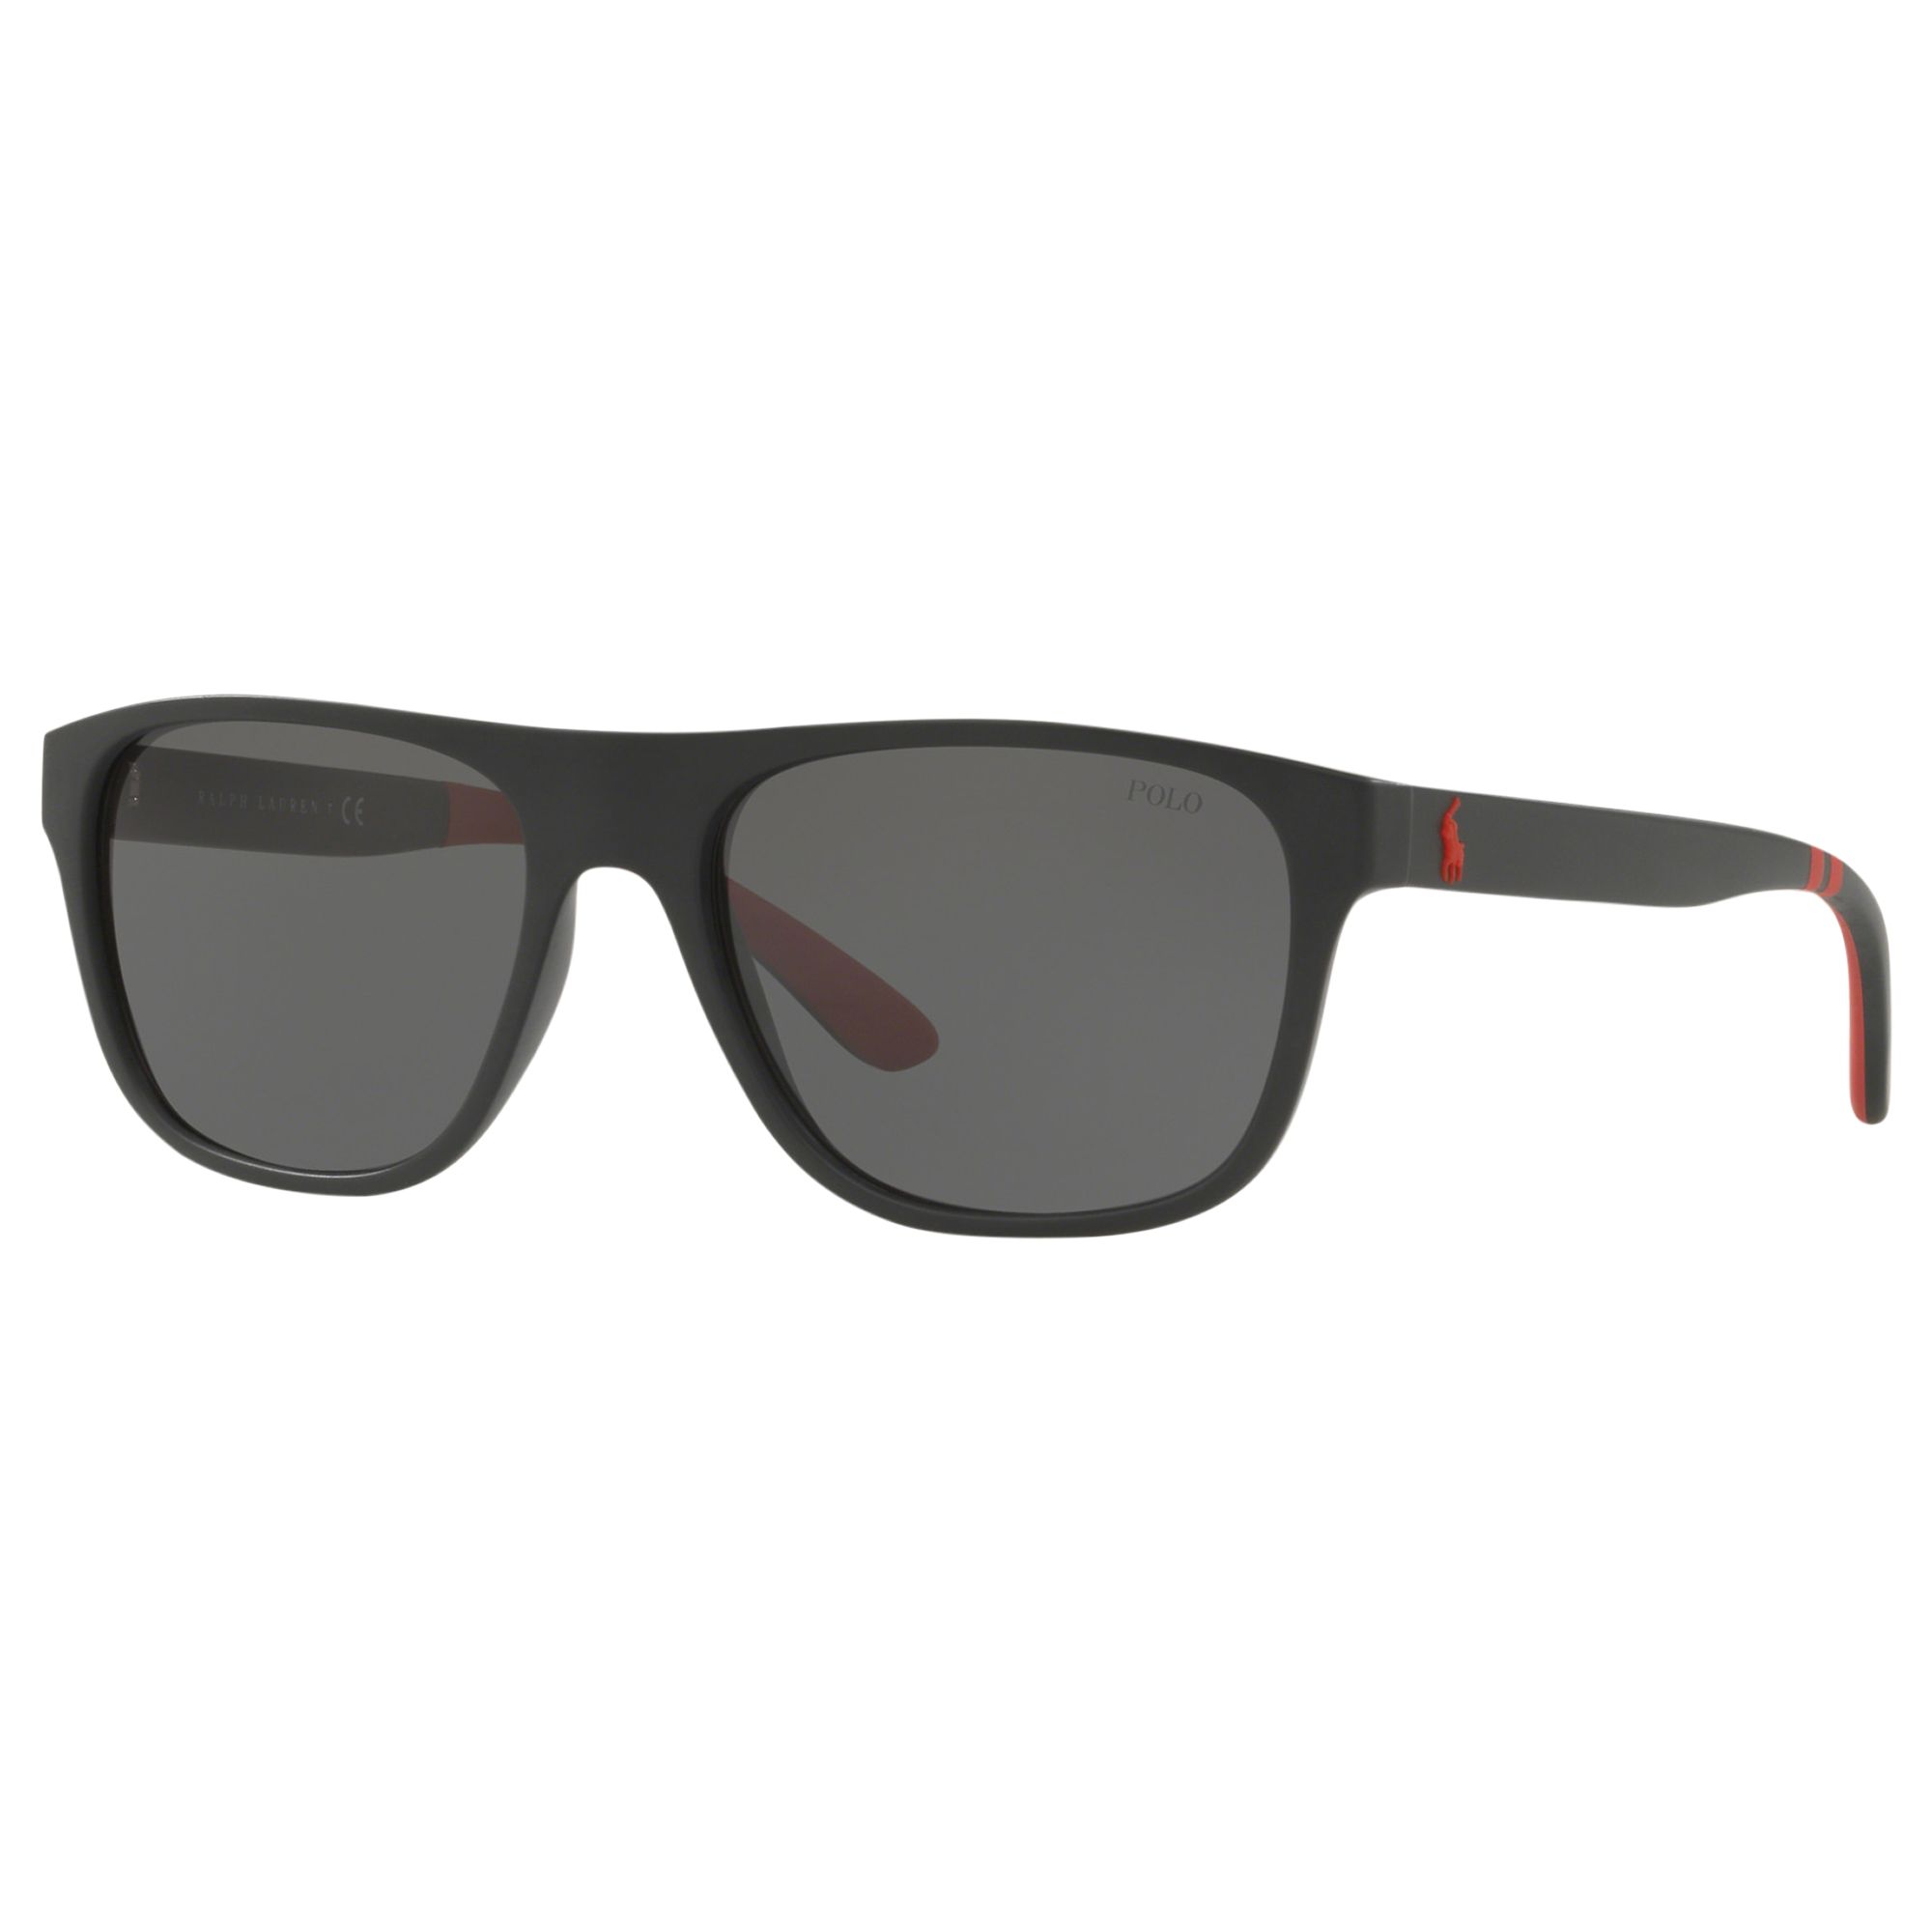 Polo Ralph Lauren PH4131 Men's Rectangular Sunglasses, Matte Black/Grey